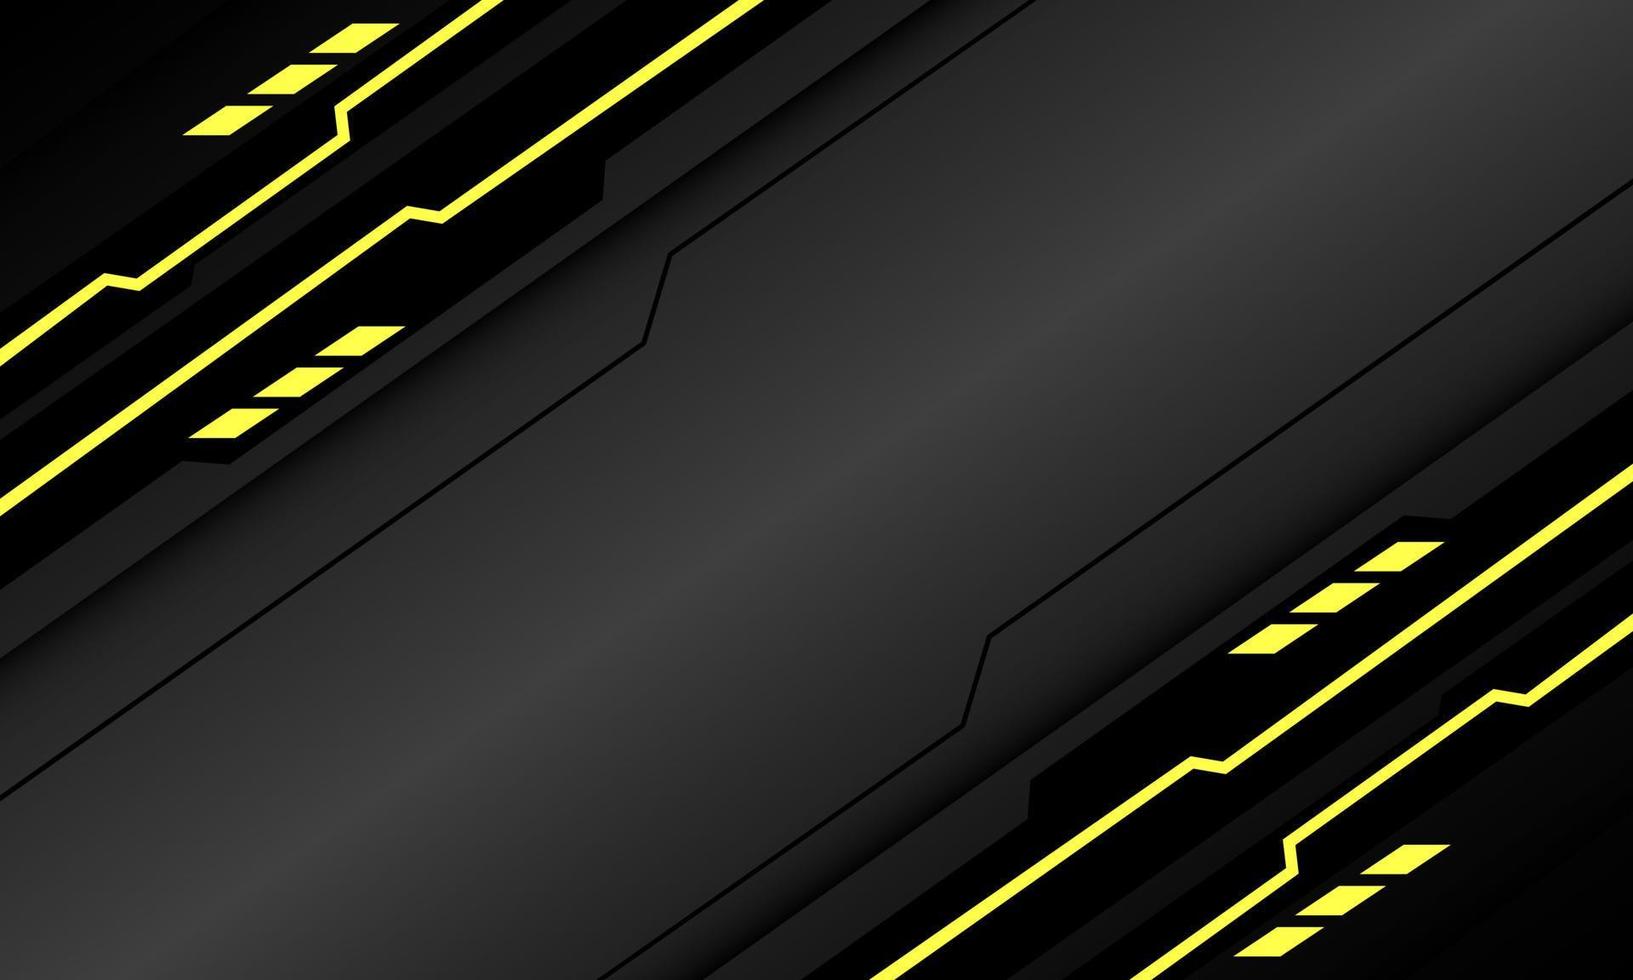 barra geométrica cibernética de luz azul de circuito preto abstrato em design metálico cinza tecnologia moderna vetor de fundo futurista